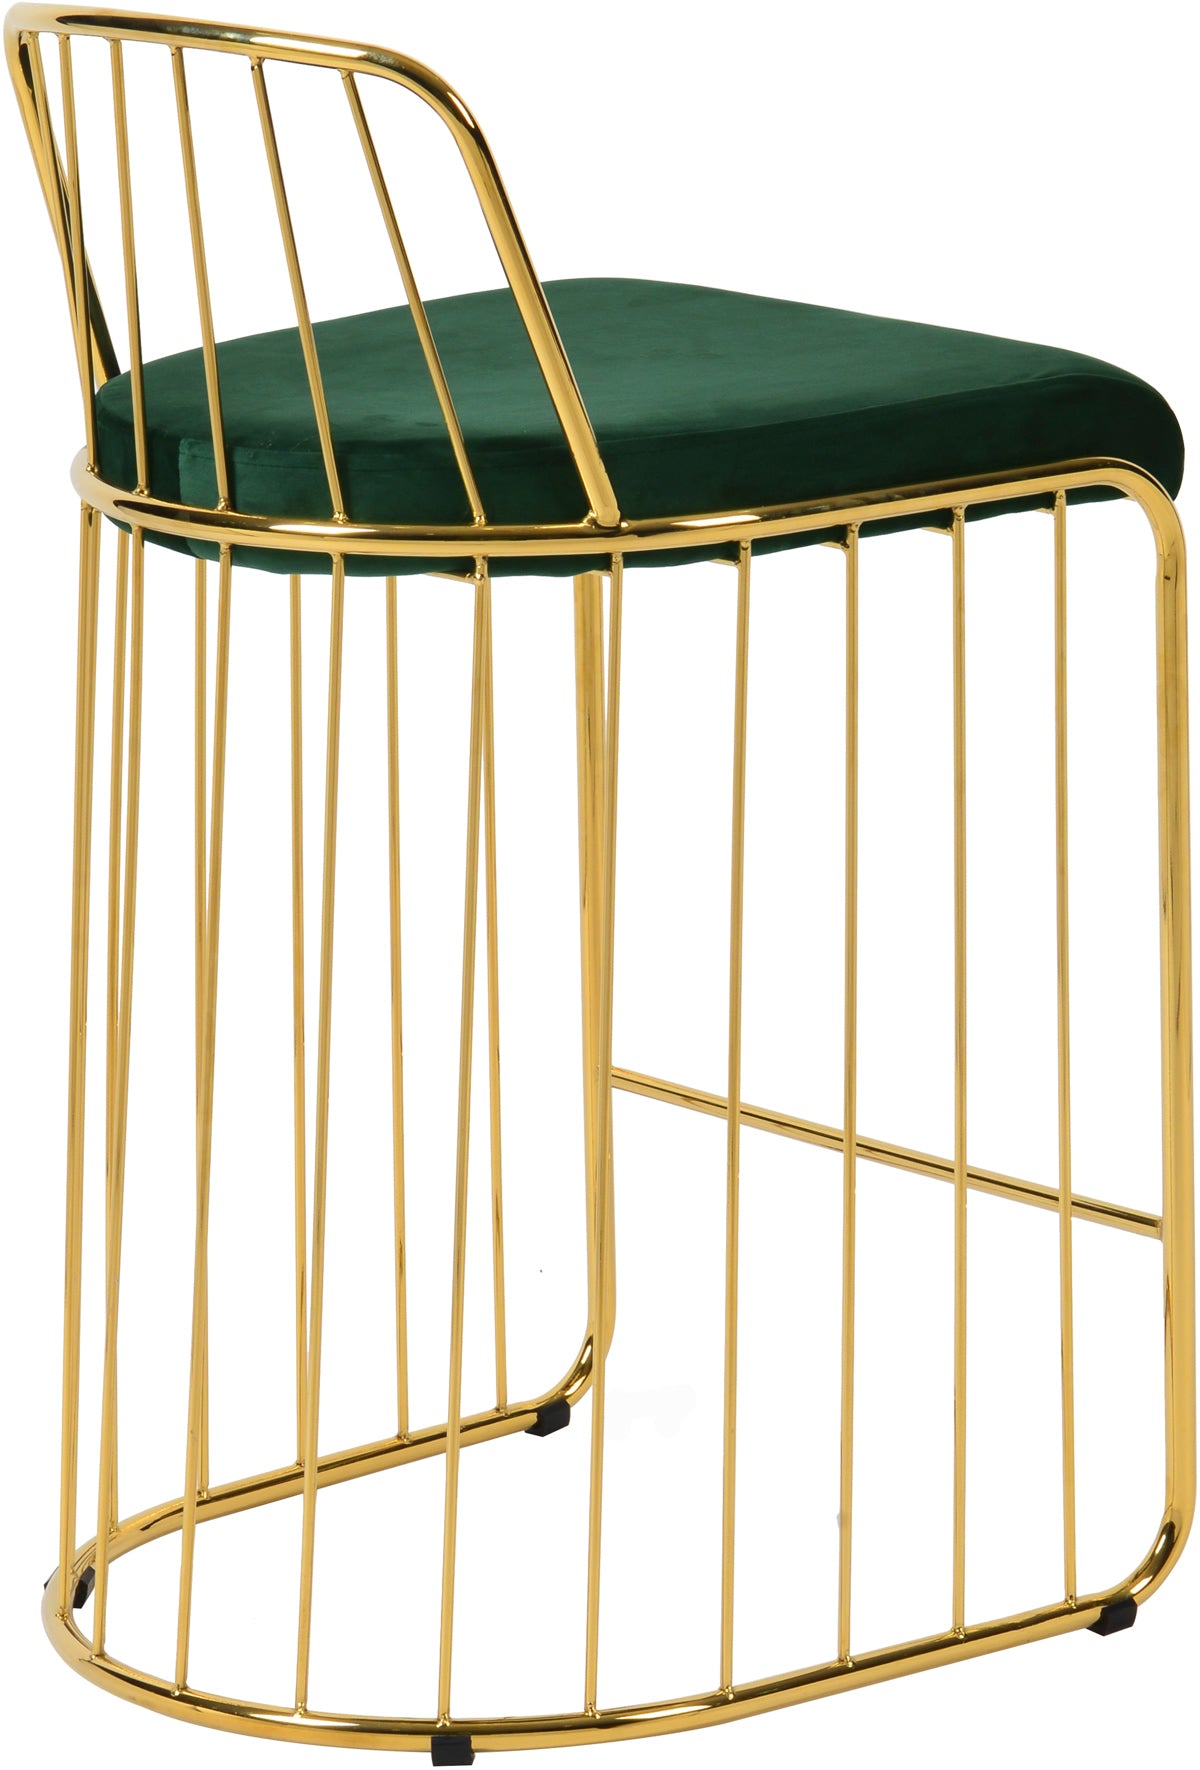 Meridian Furniture Gio Green Velvet Stool ( Quantity of 1 Stool )